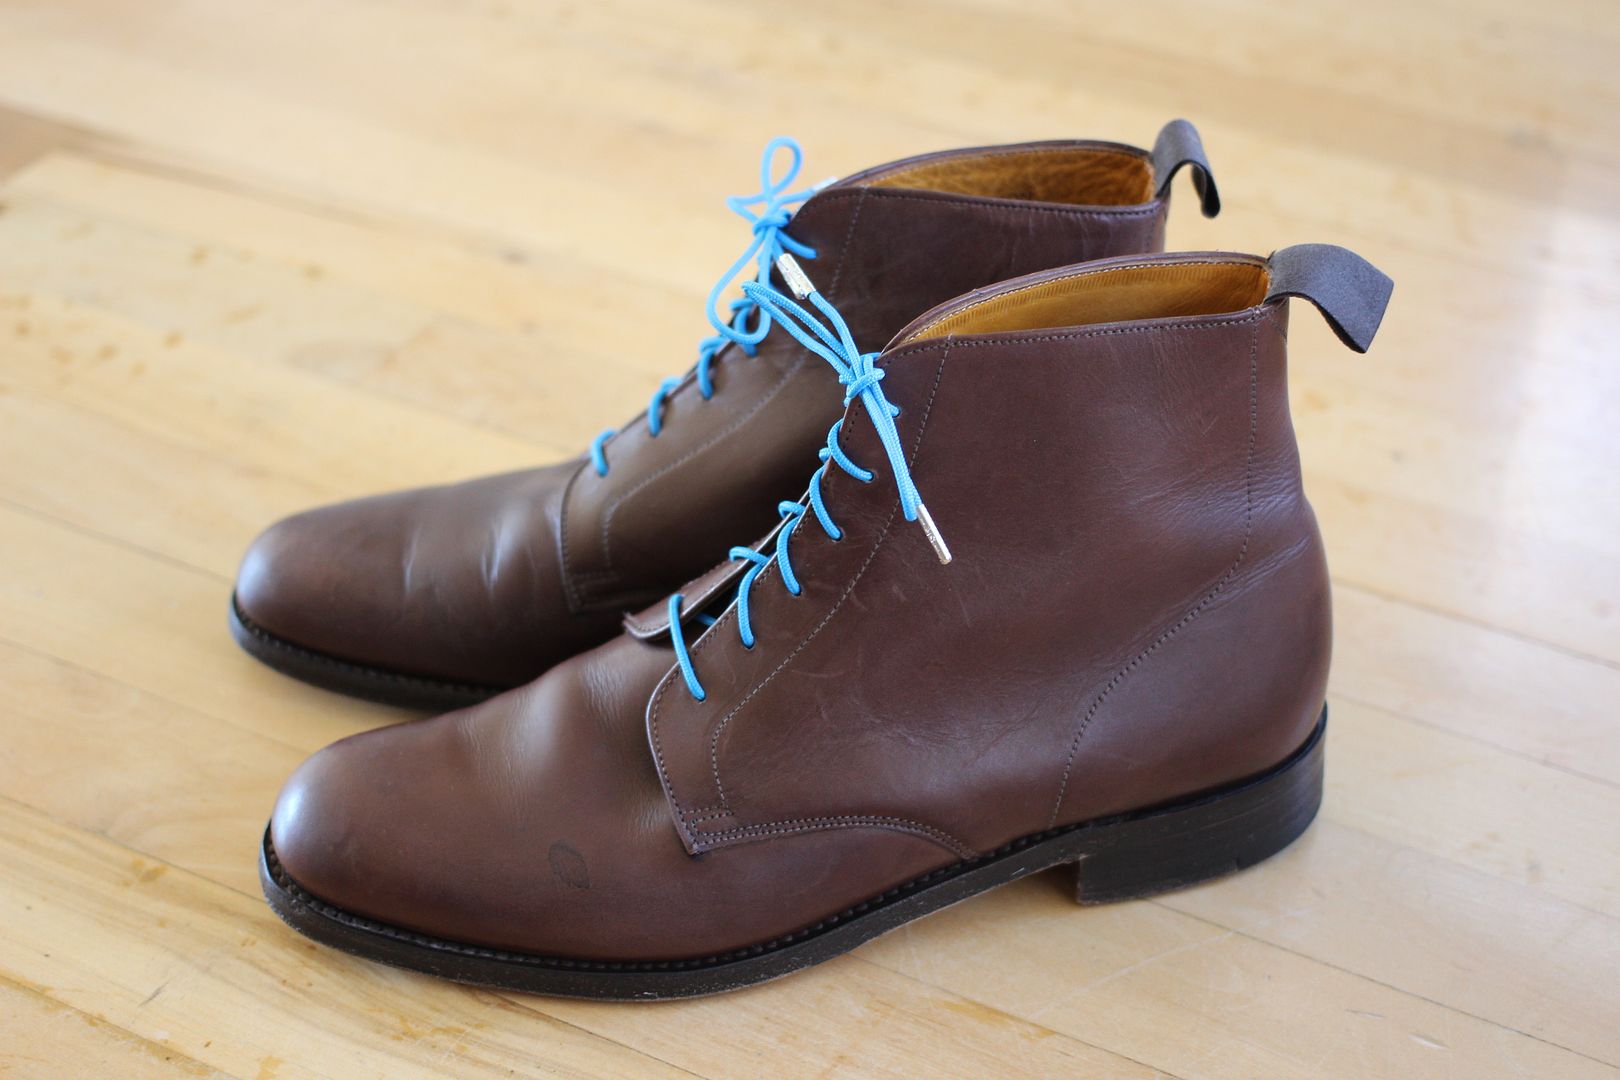 Grenson Brown Leather 6 Eyelet Chukka Boot Sz. 8.5 EF MSRP $400 | eBay